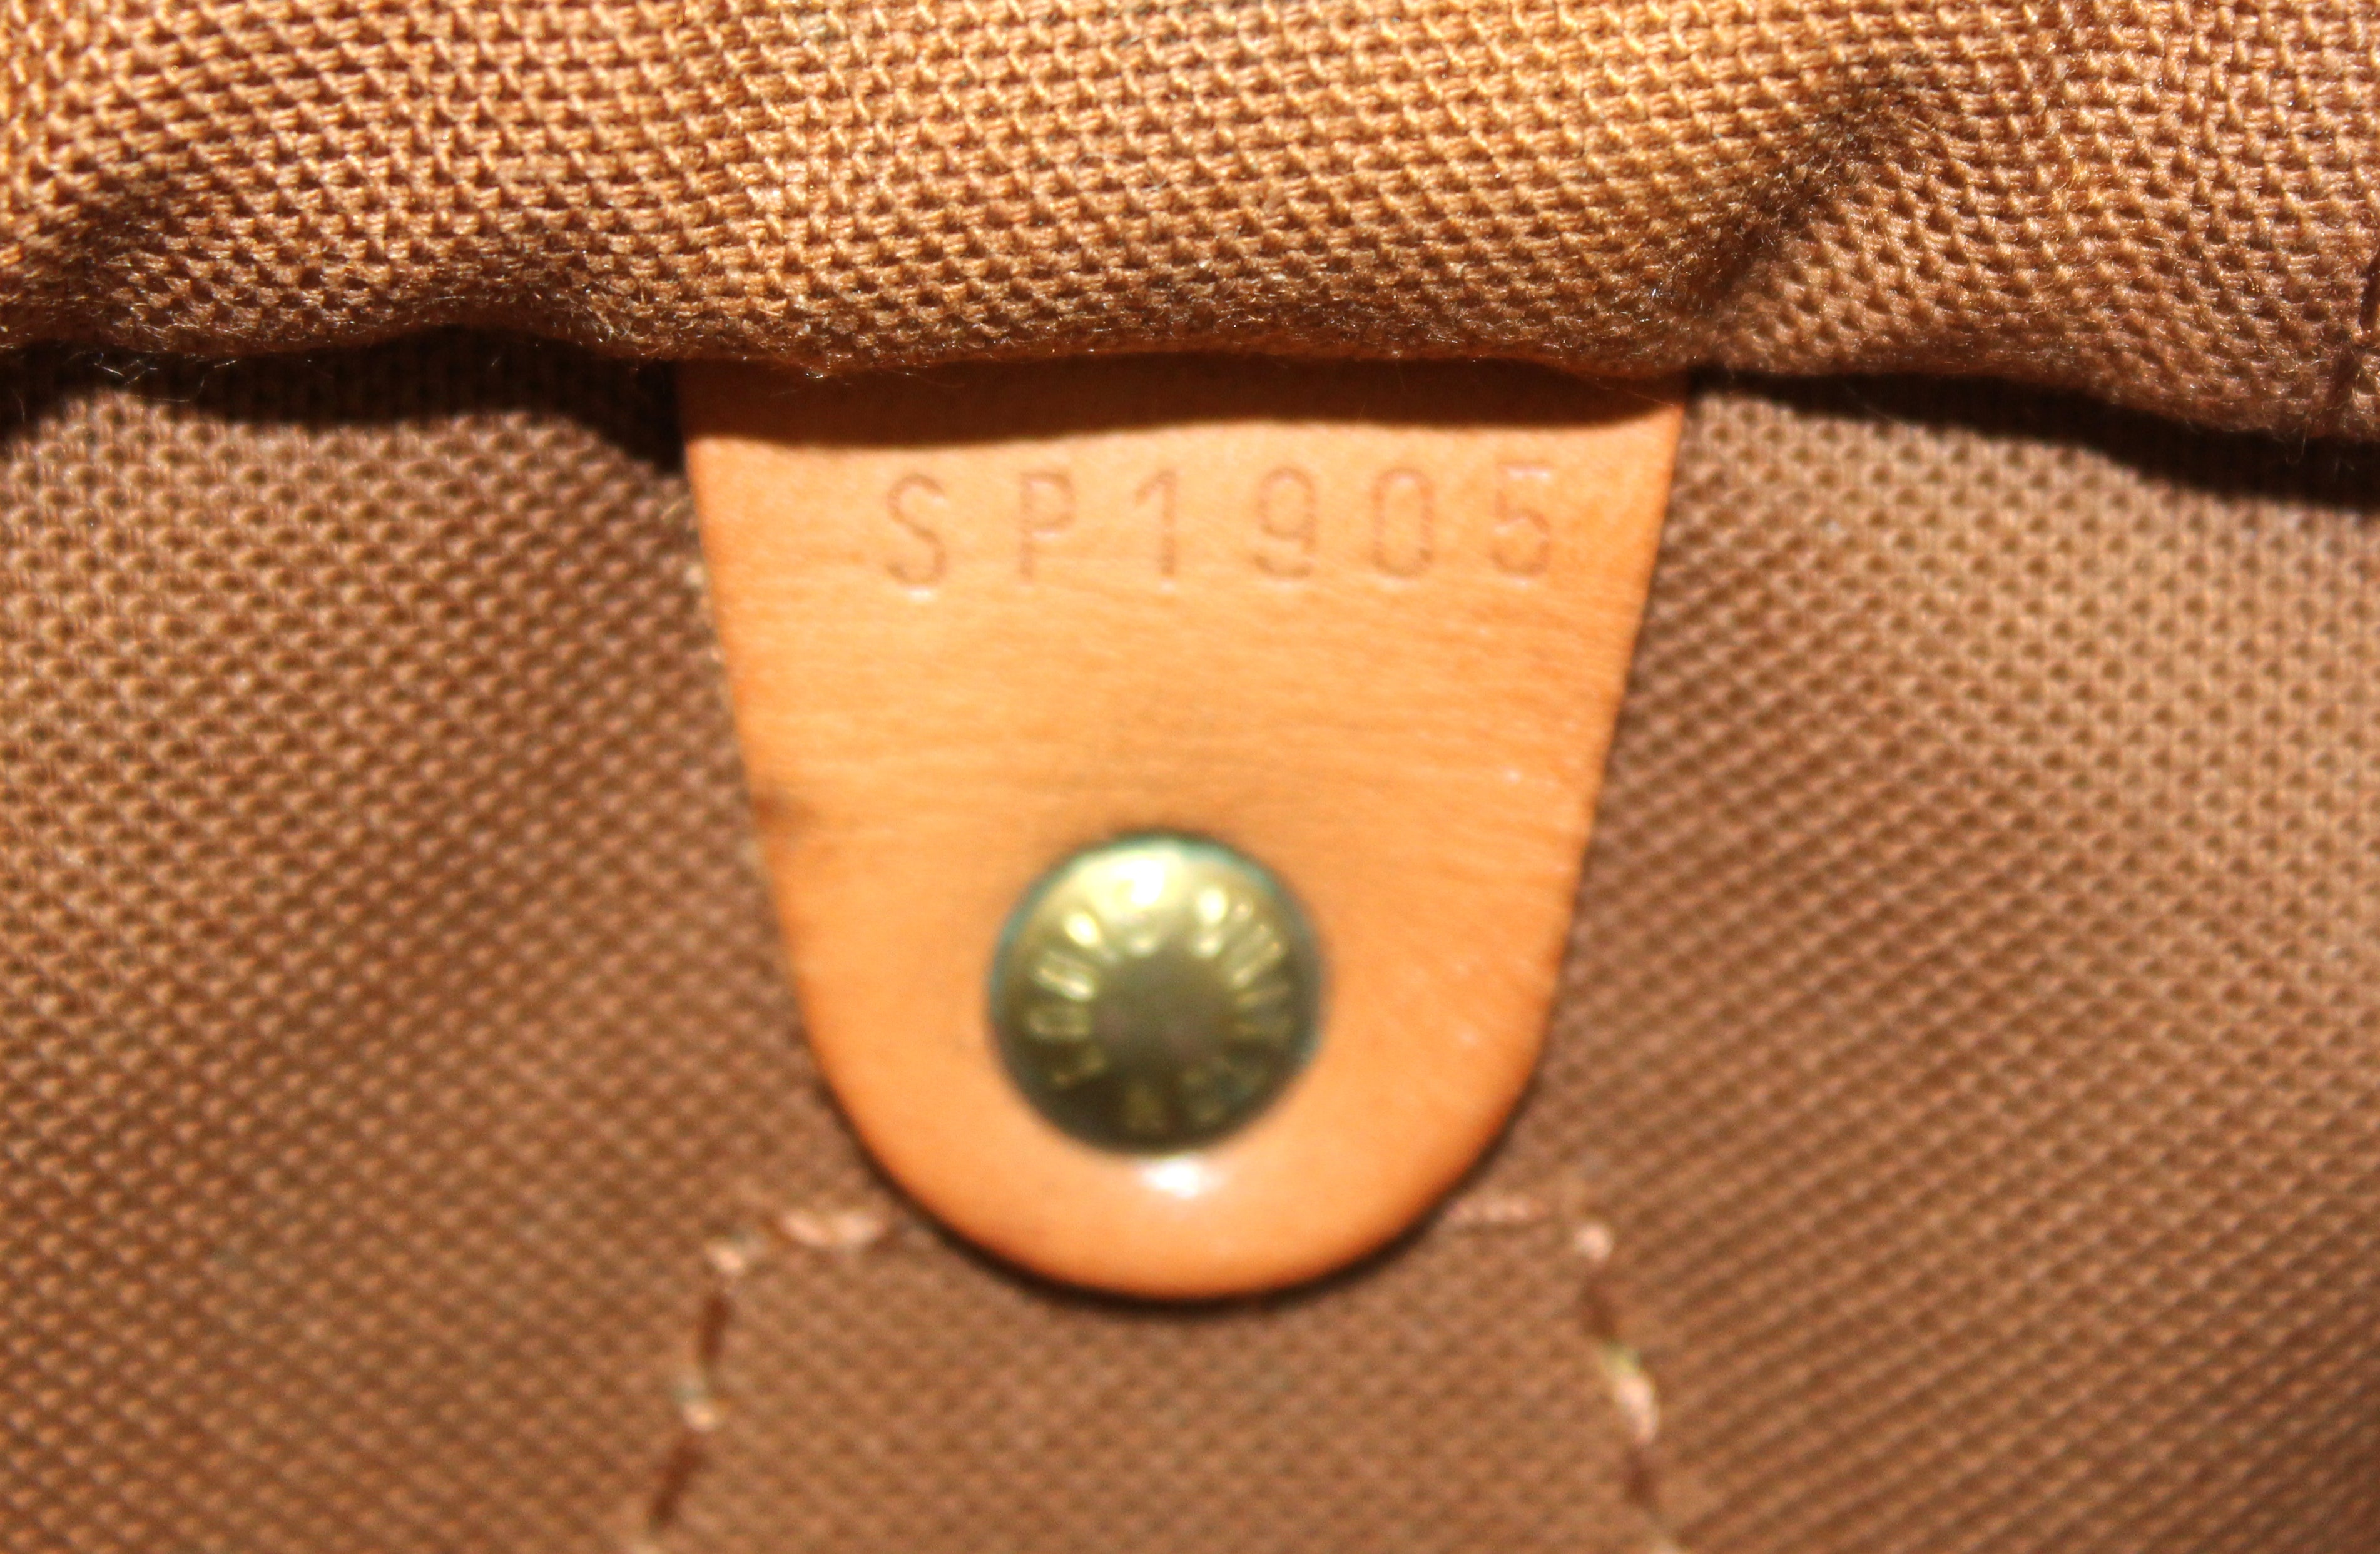 Authentic Louis Vuitton Classic Monogram Vintage Speedy 35 Handbag